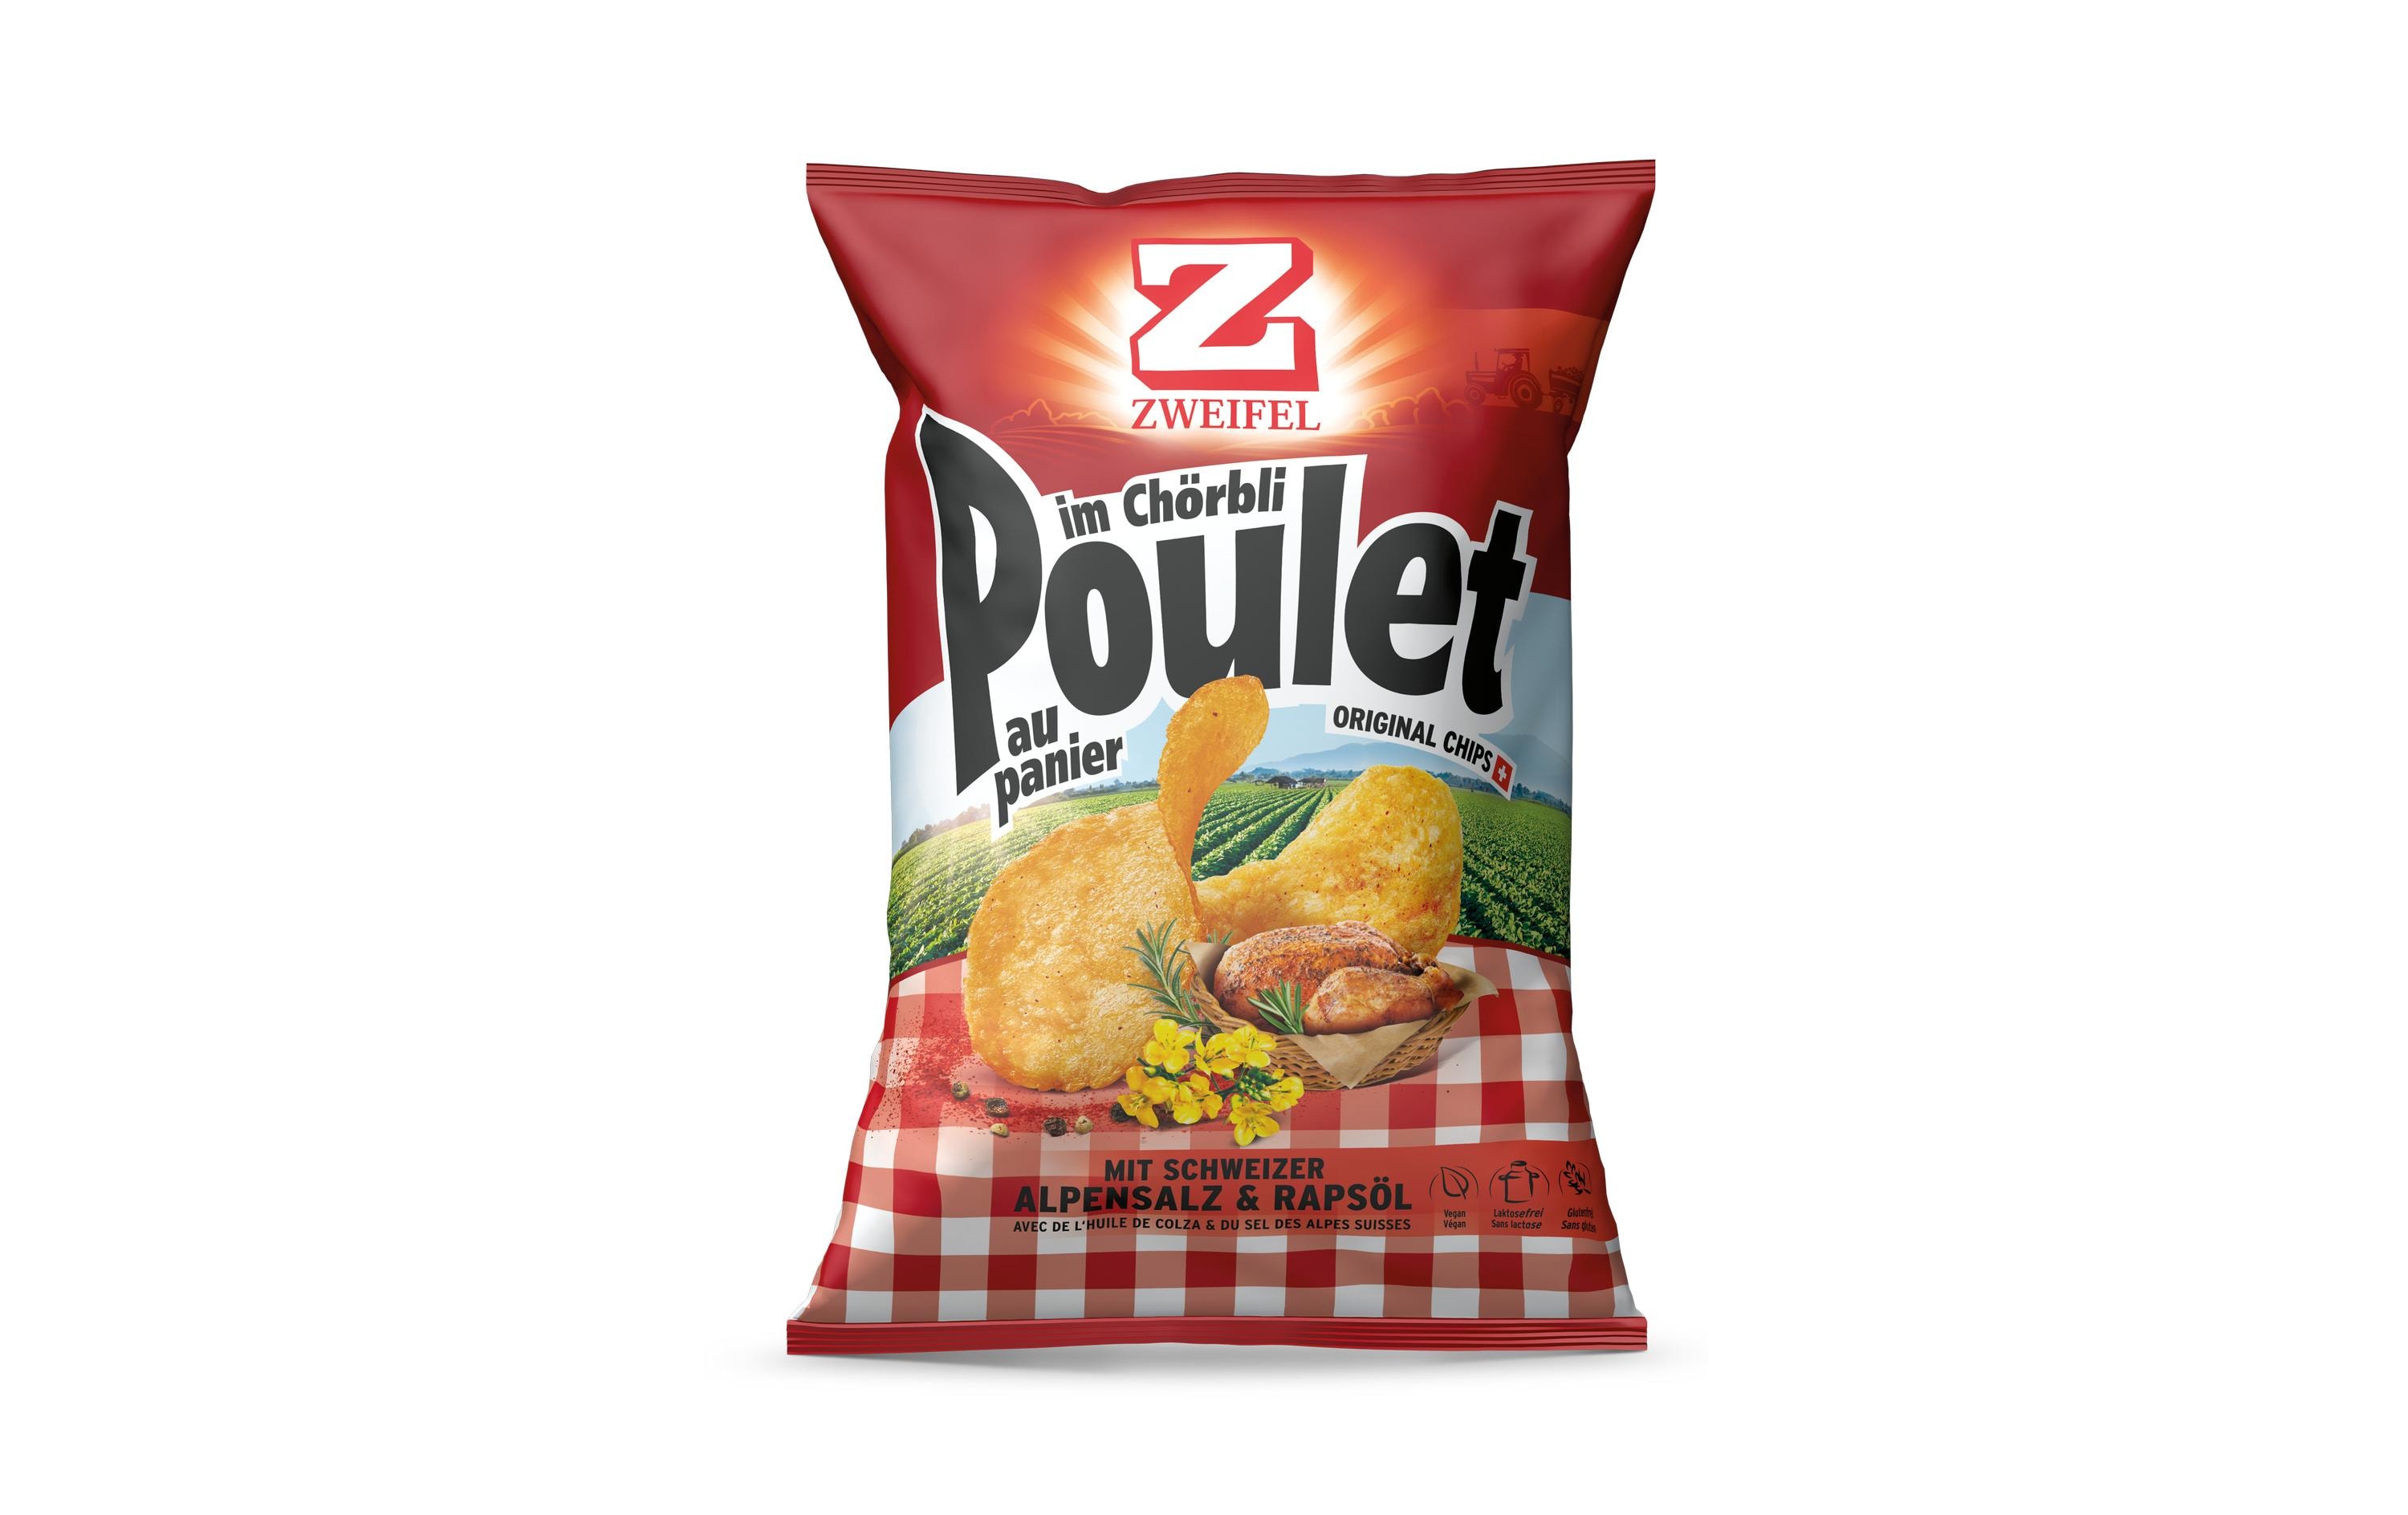 Zweifel Original Chips Poulet im Chörbli 175 g